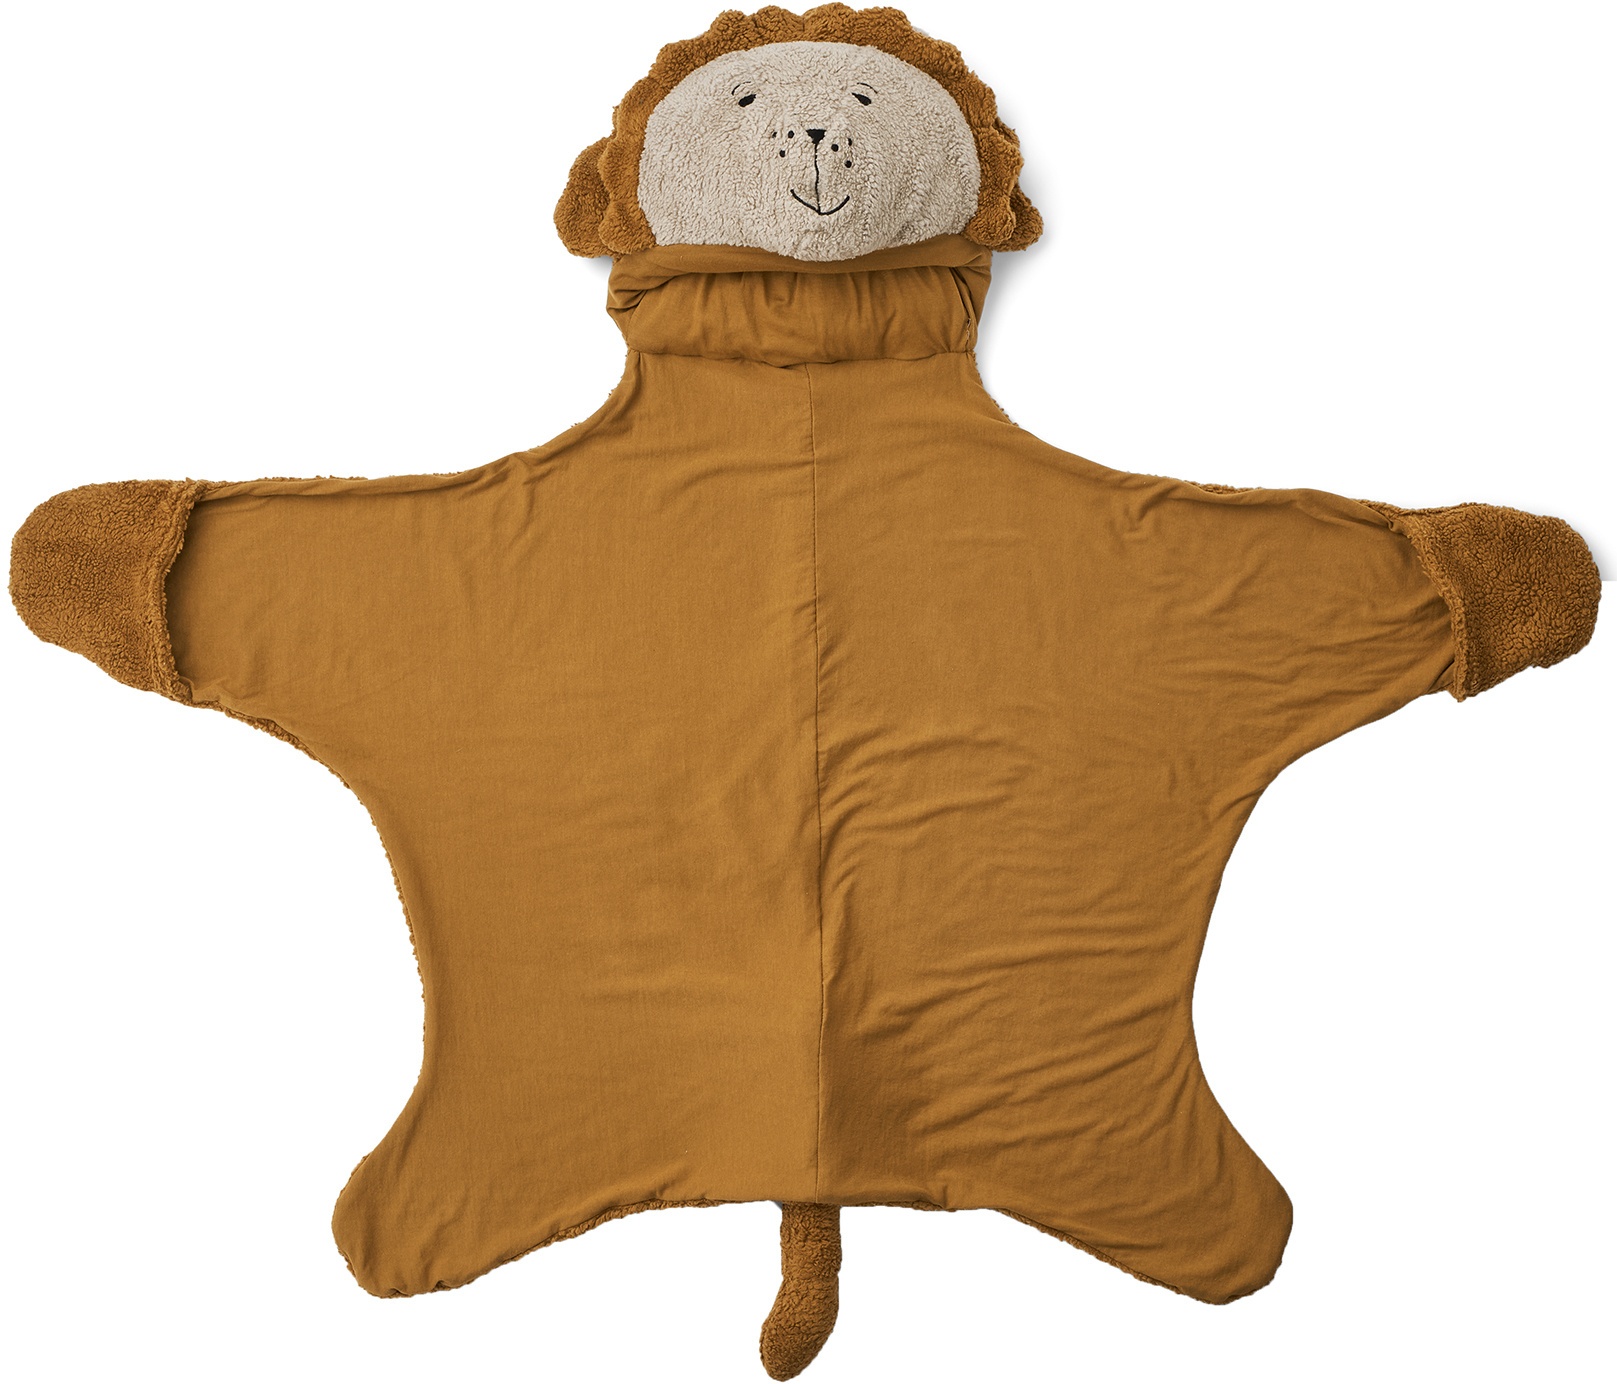 LIEWOOD - Kostüm FREY LION in golden caramel